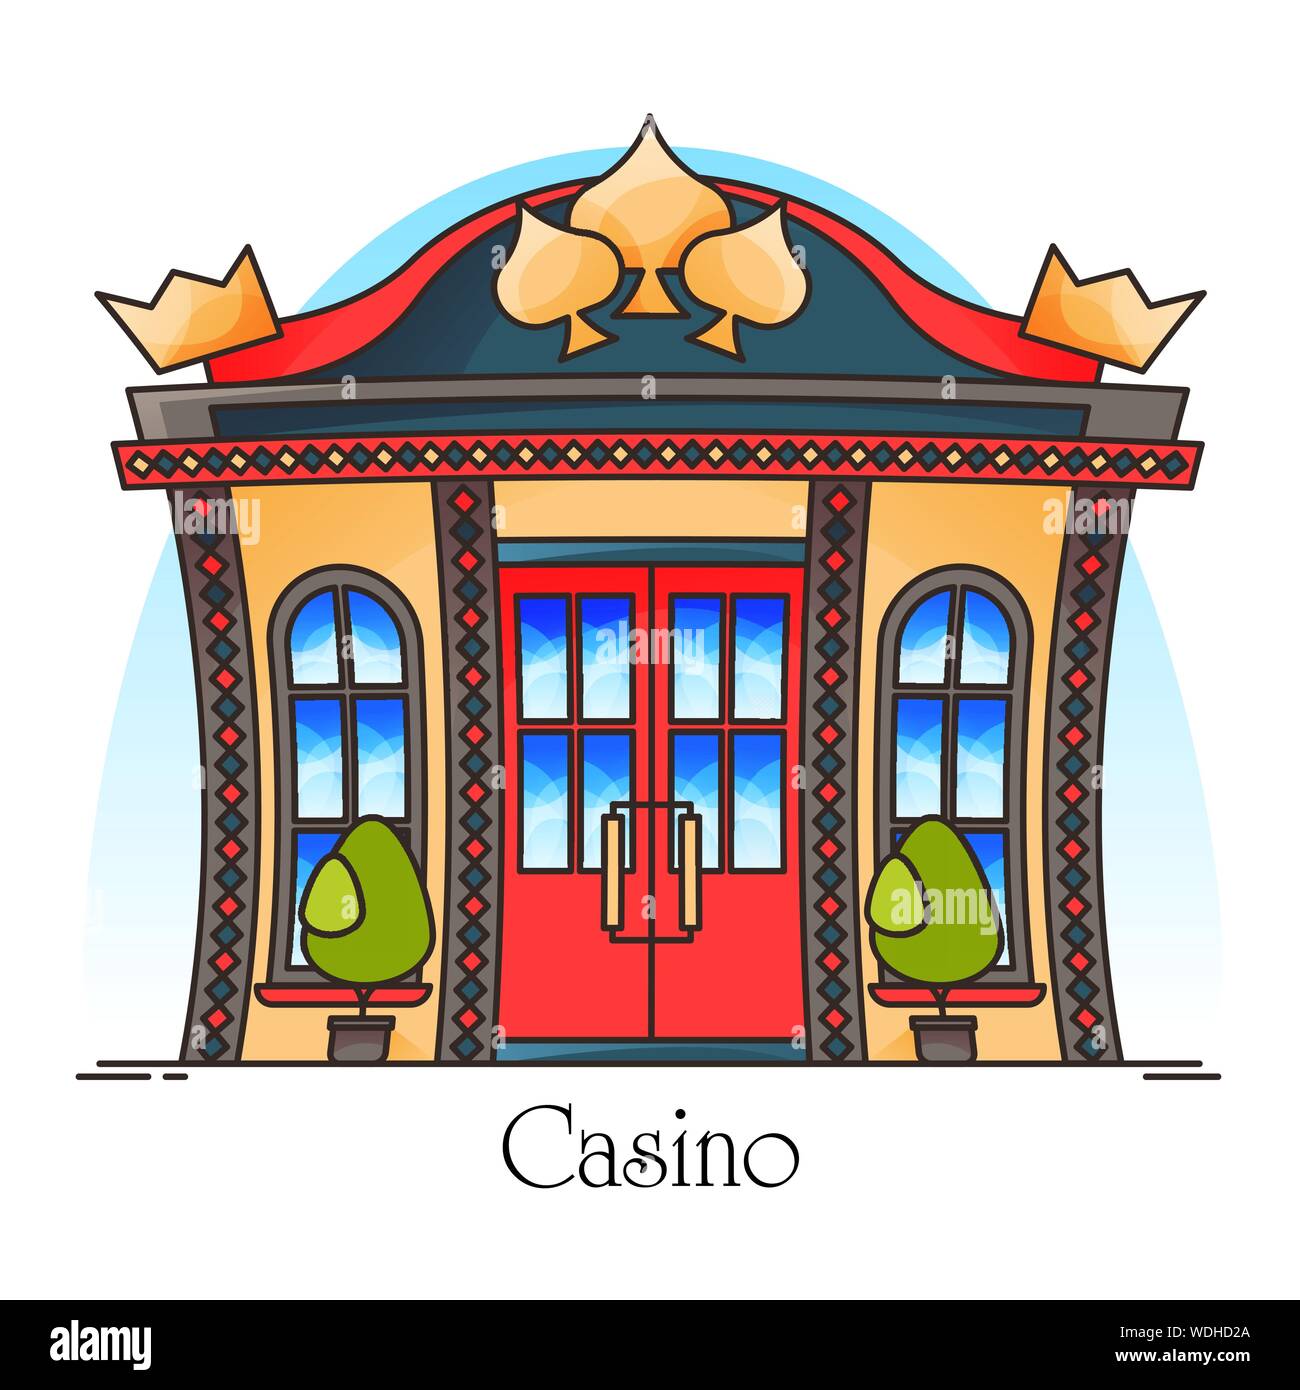 Casino building or gambling house entrance Stock Vector